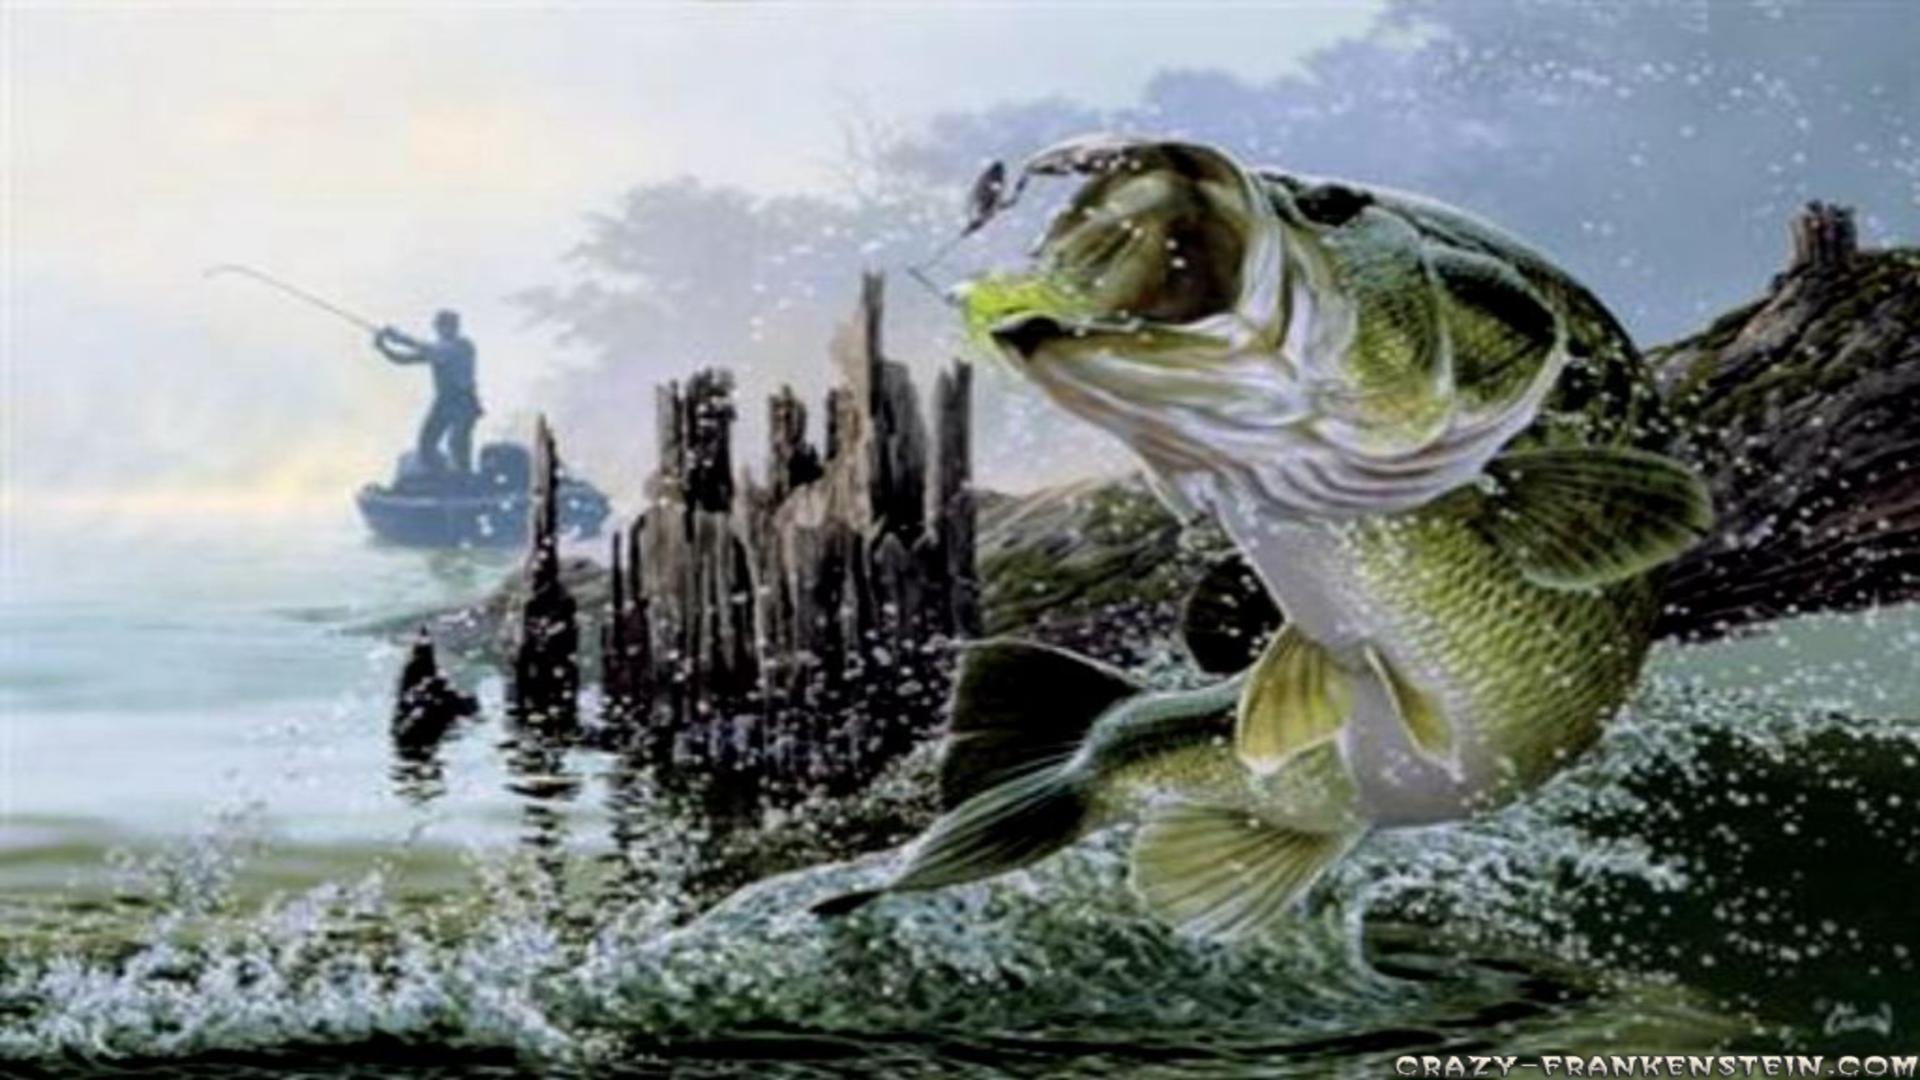 bass fishing fondos de pantalla hd,tortuga verde,tortuga,tortuga marina,reptil,pez